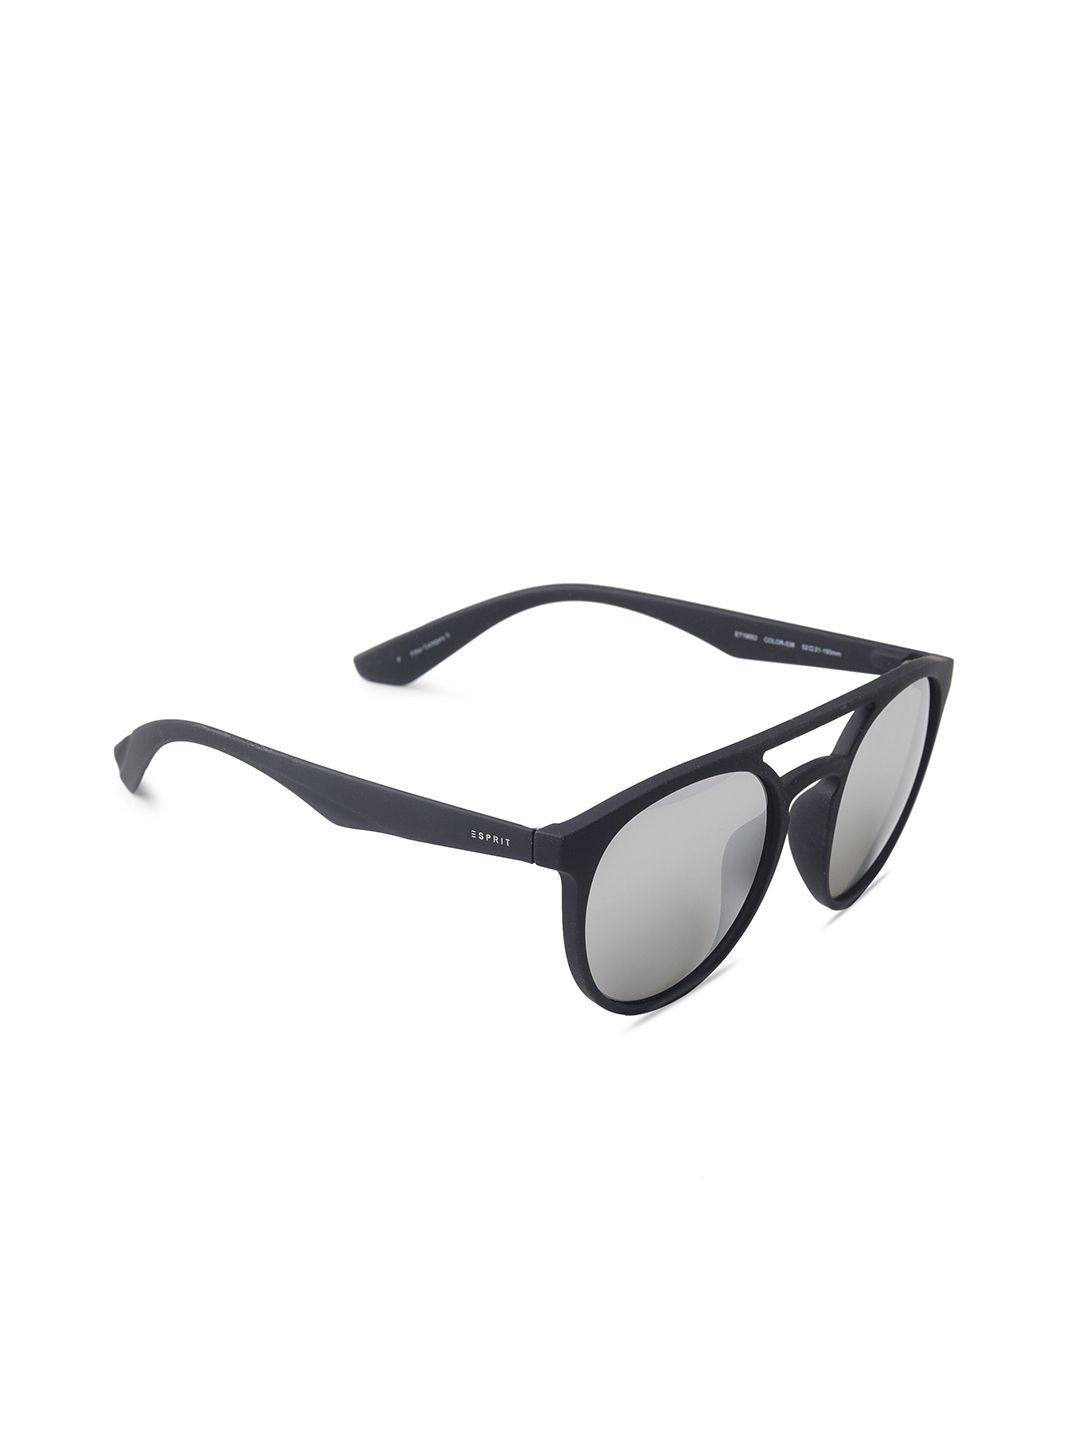 ESPRIT Unisex Mirrored Lens & Black Round Sunglasses with UV Protected Lens Price in India